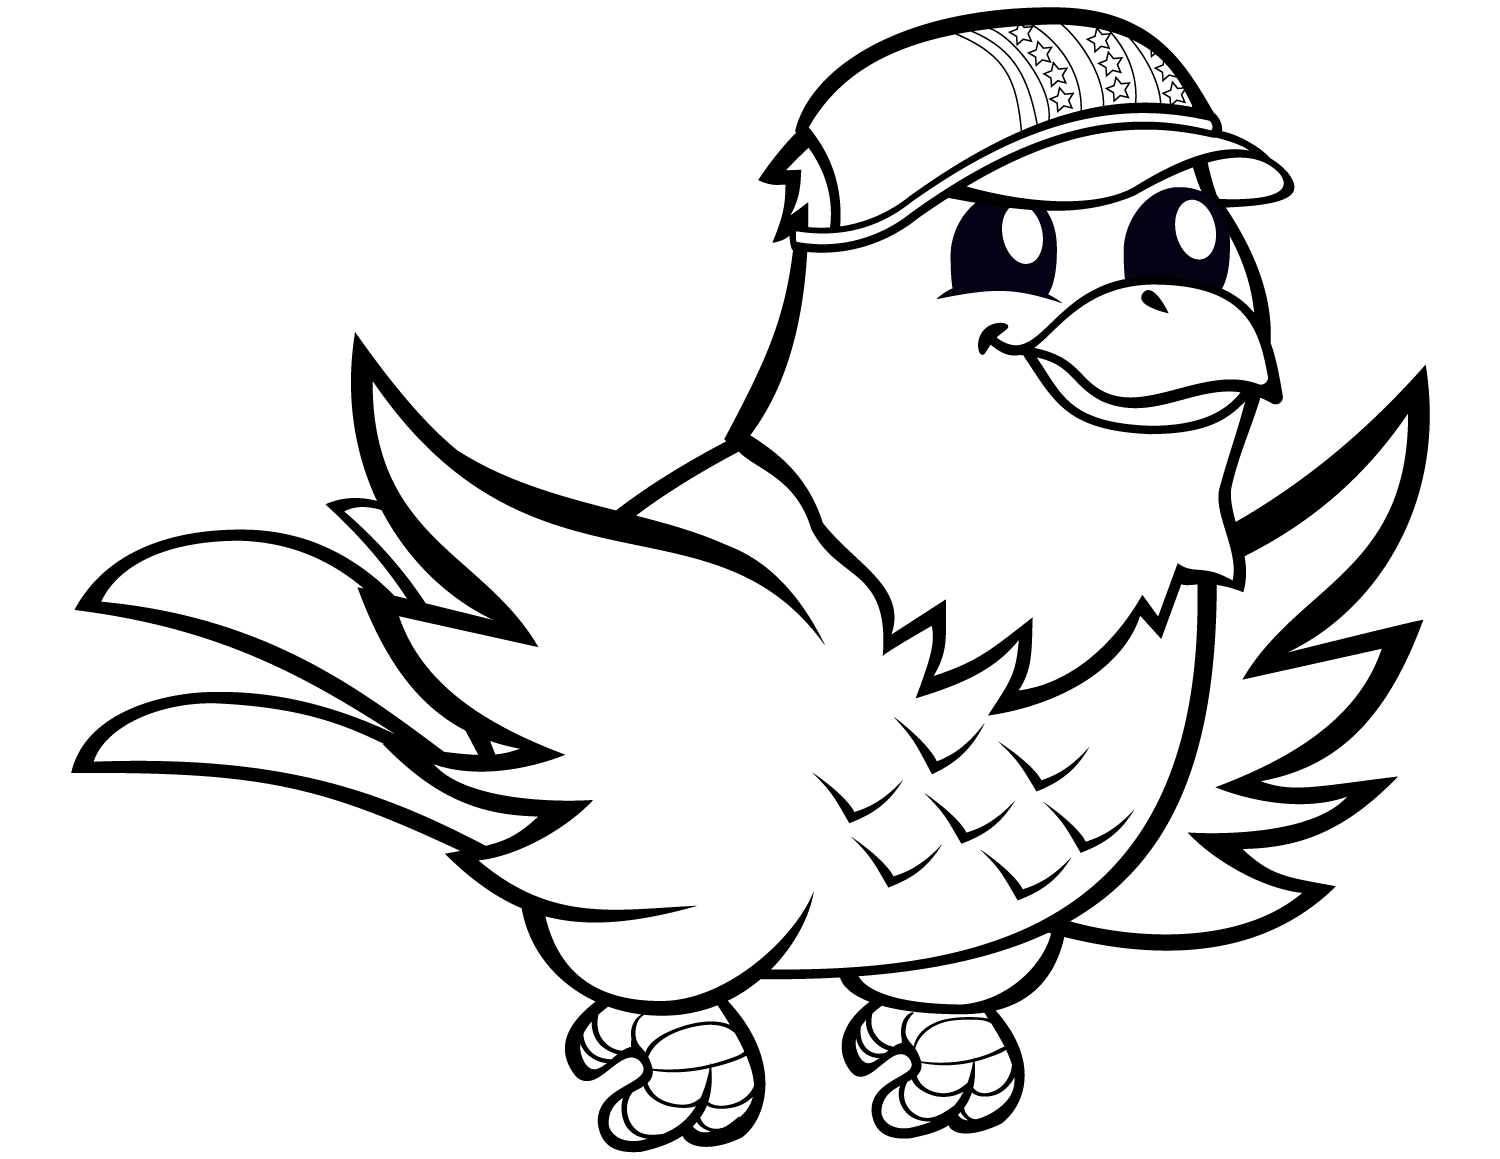 Funny Eagle With Baseball Cap